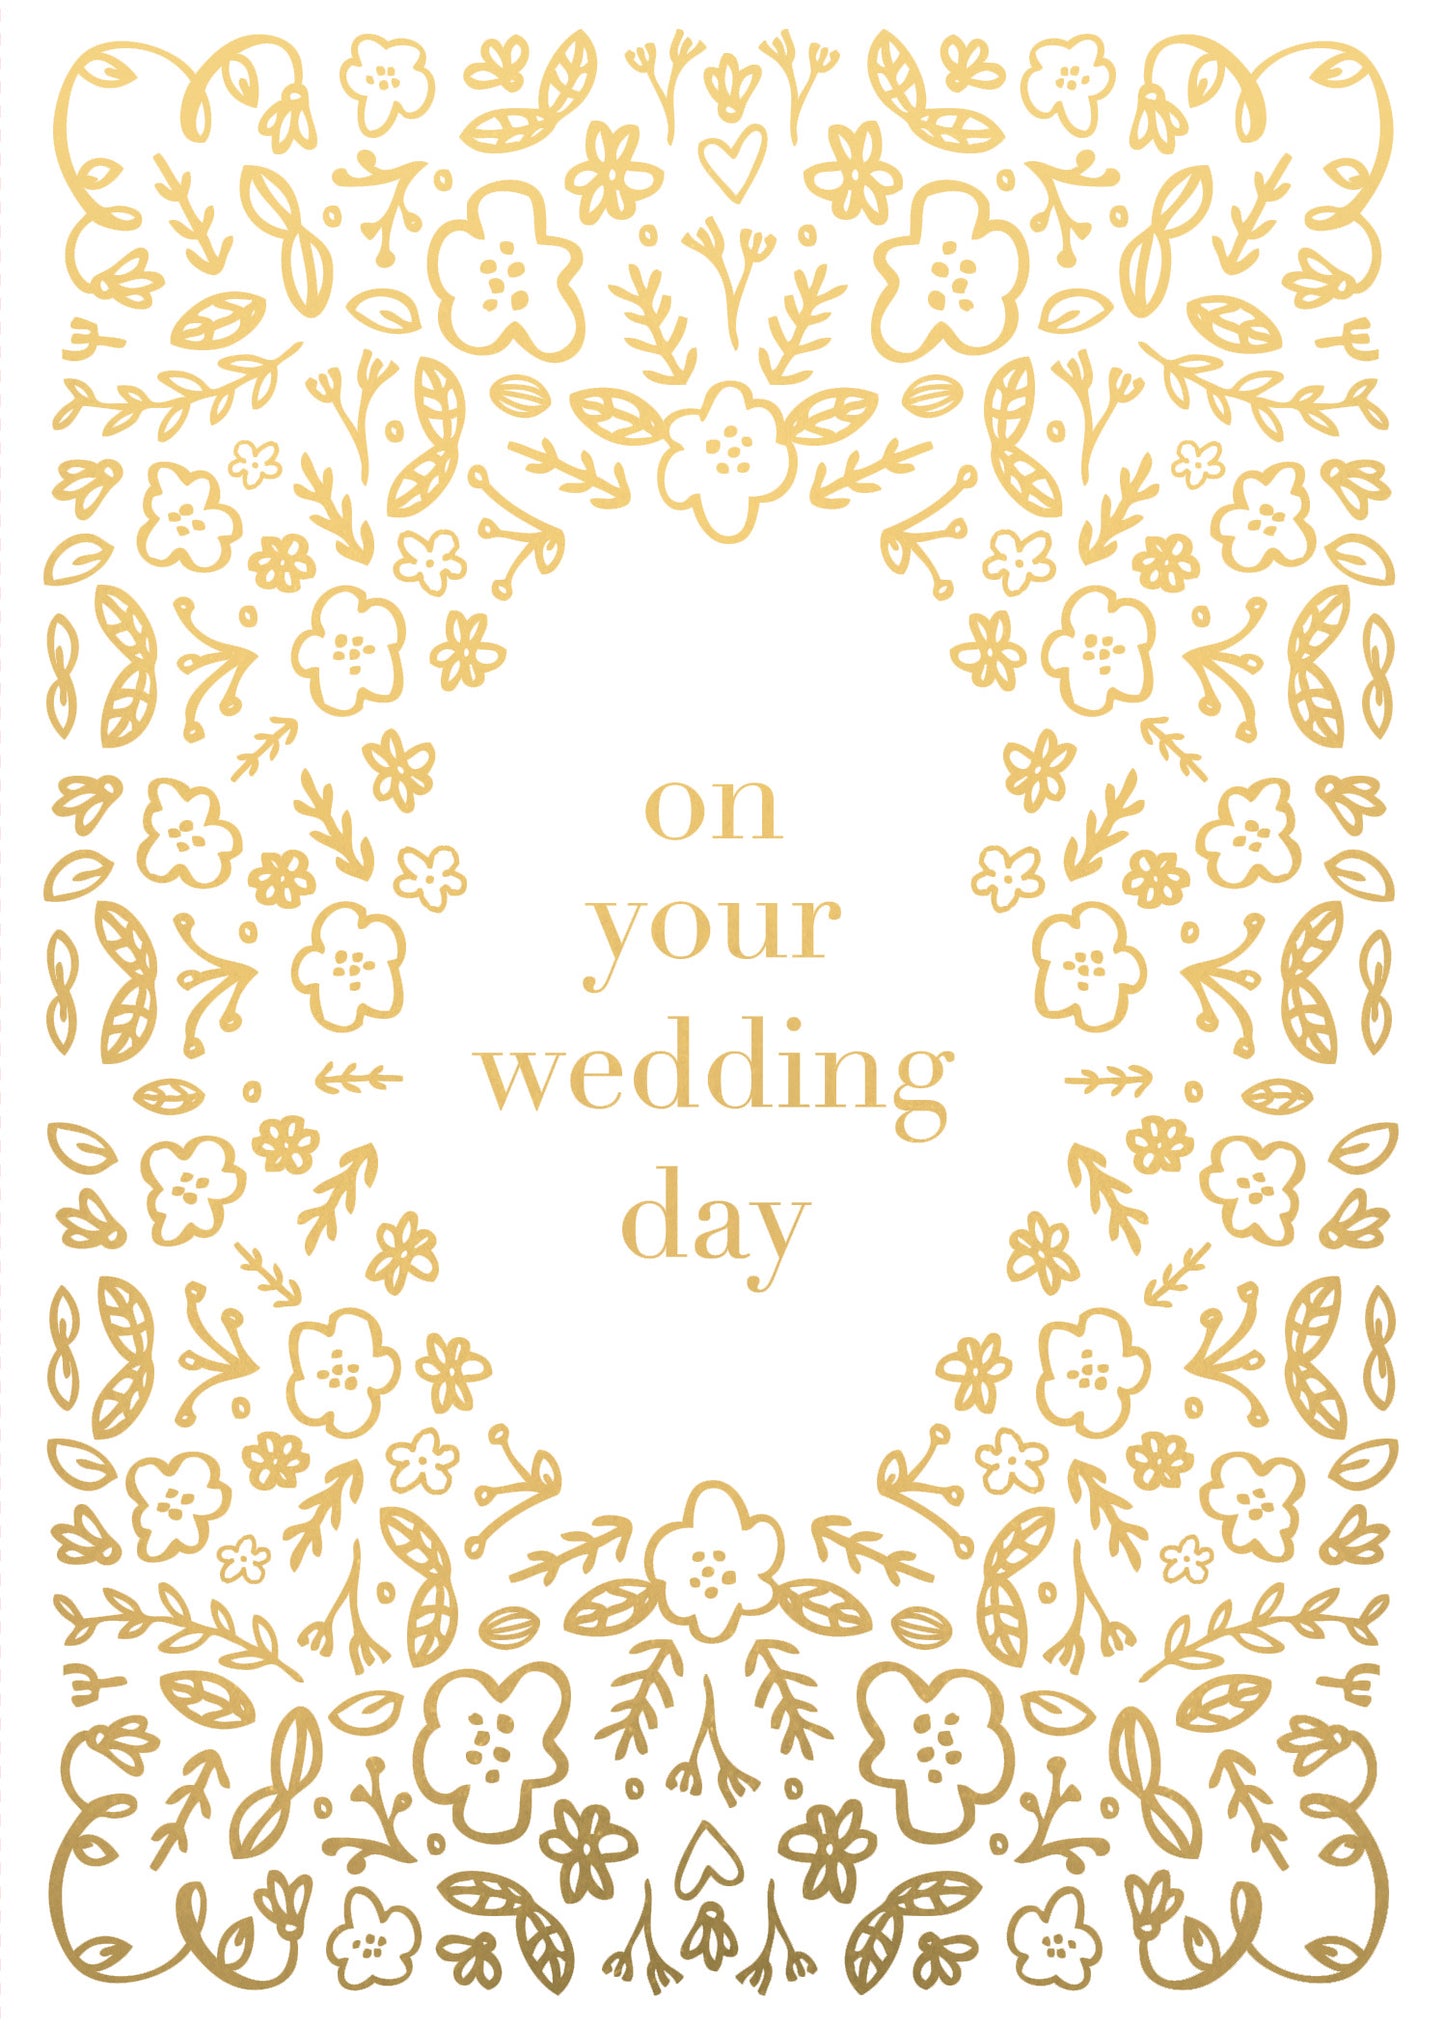 Greeting Card WEDDING - YOUR WEDDING DAY